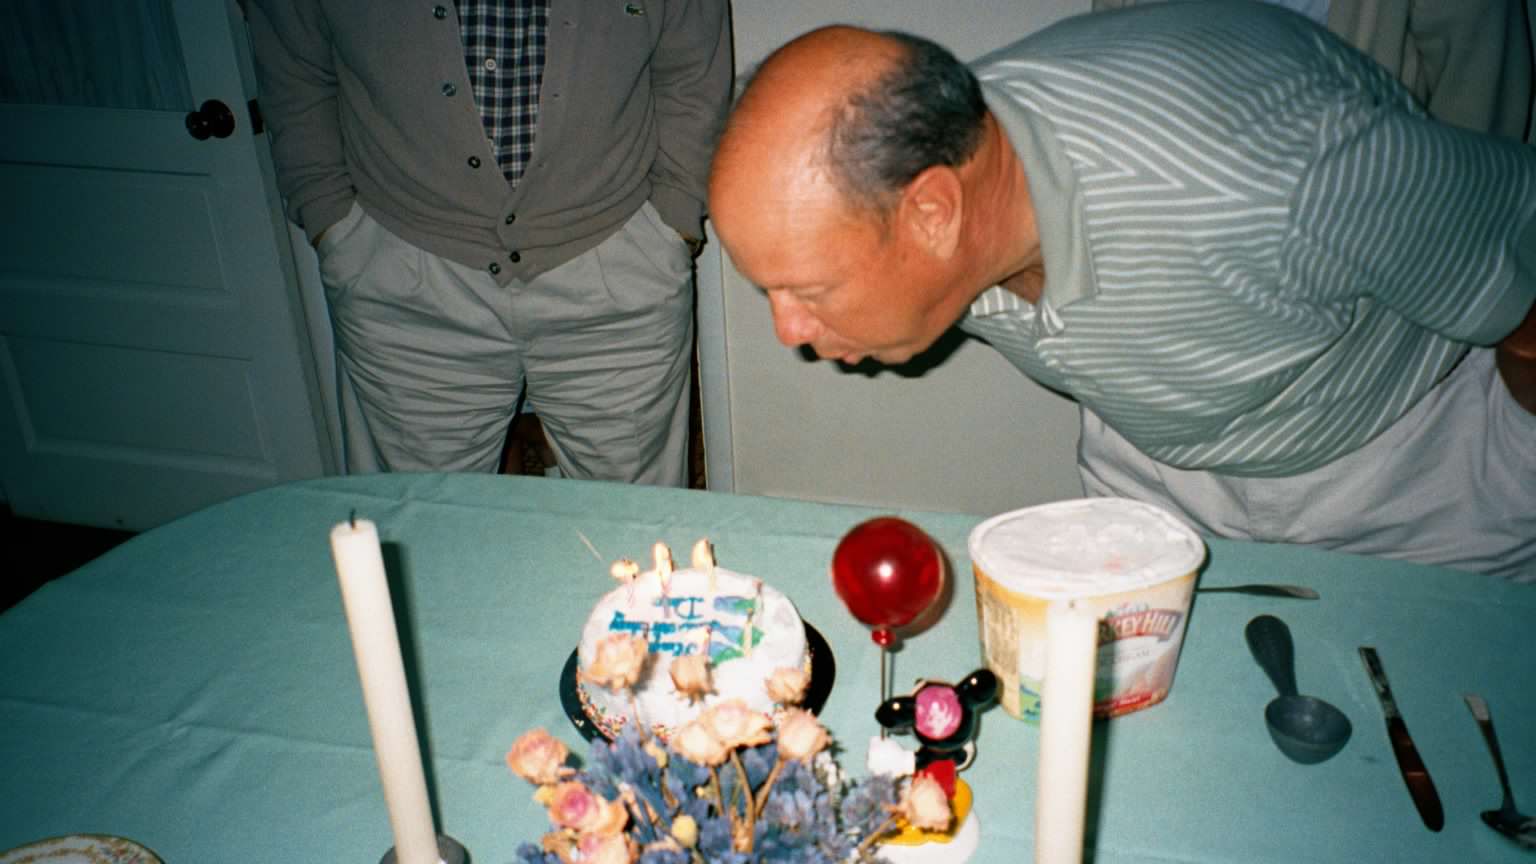 Don celebrates his Birthday